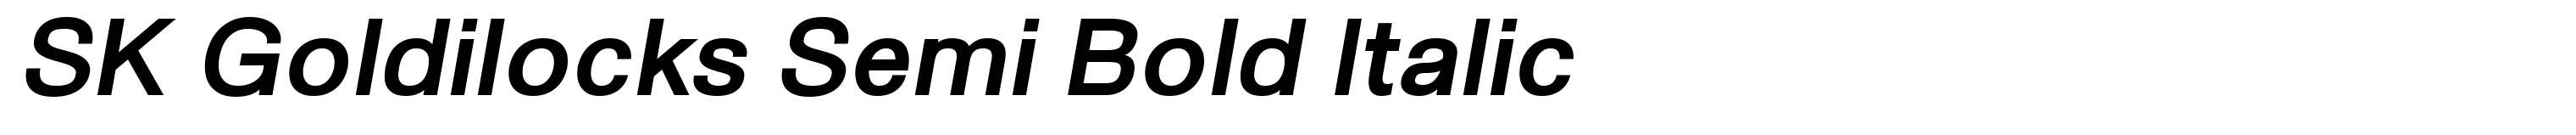 SK Goldilocks Semi Bold Italic